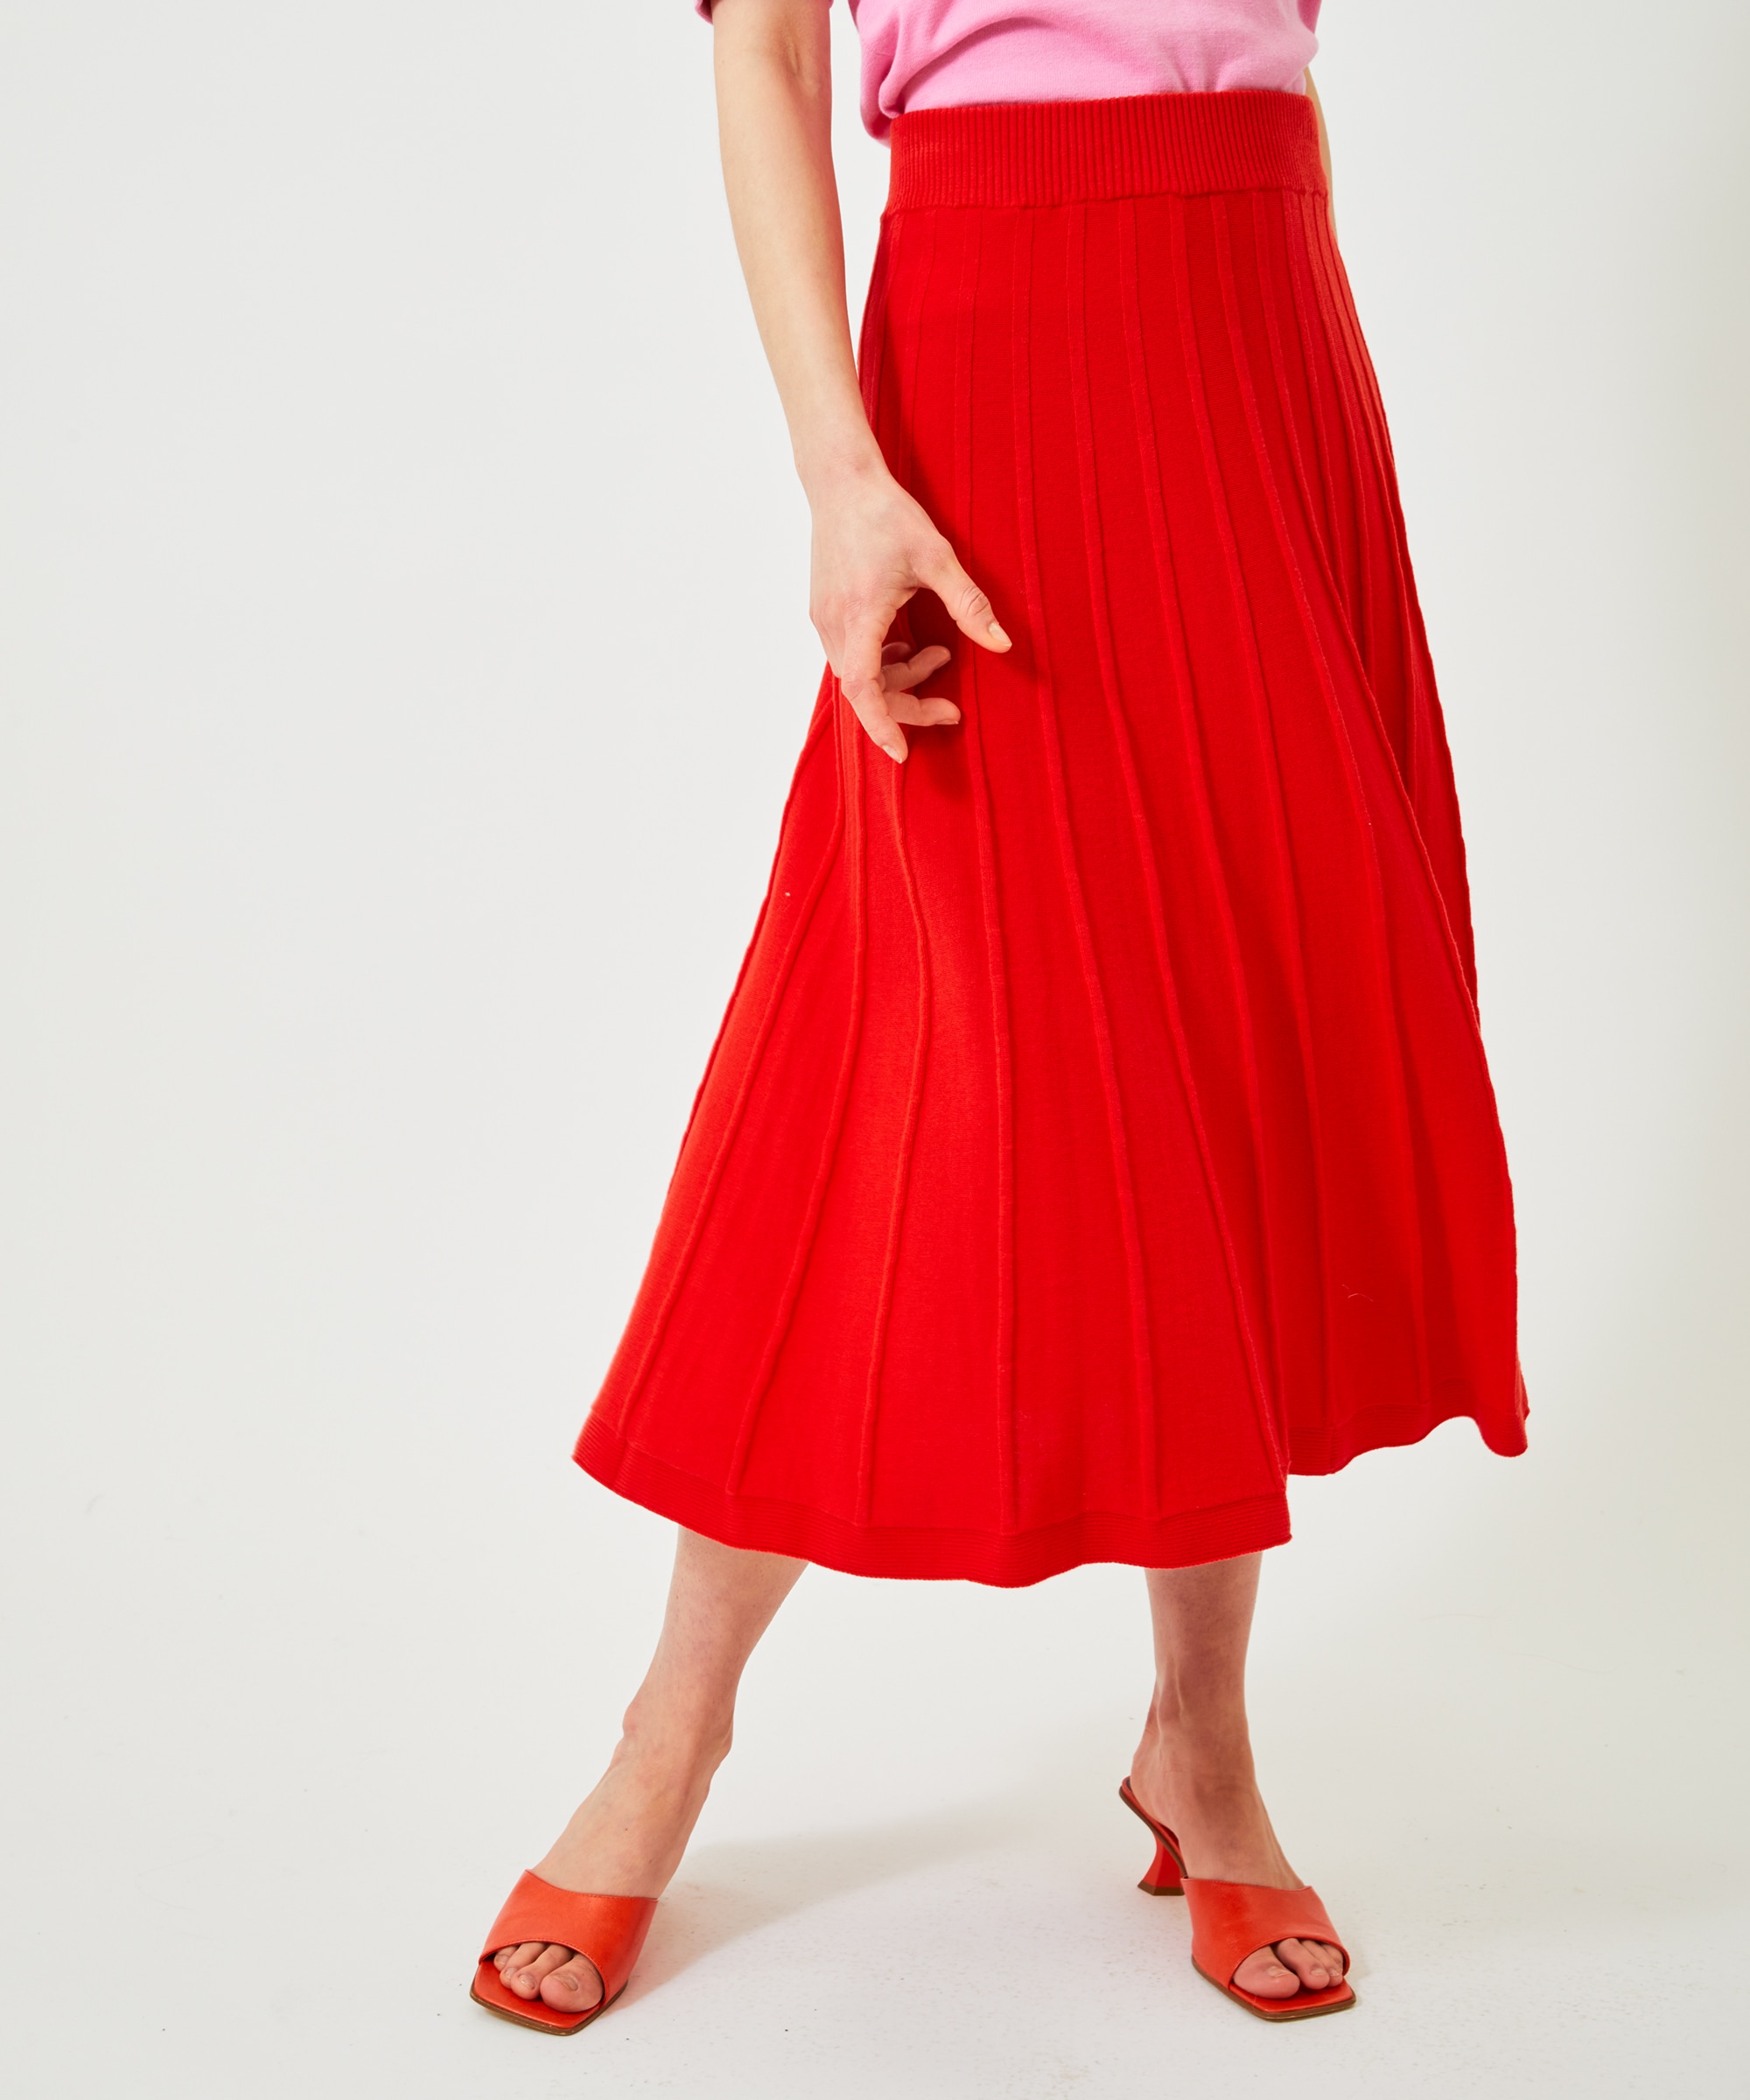 Klara Skirt Red